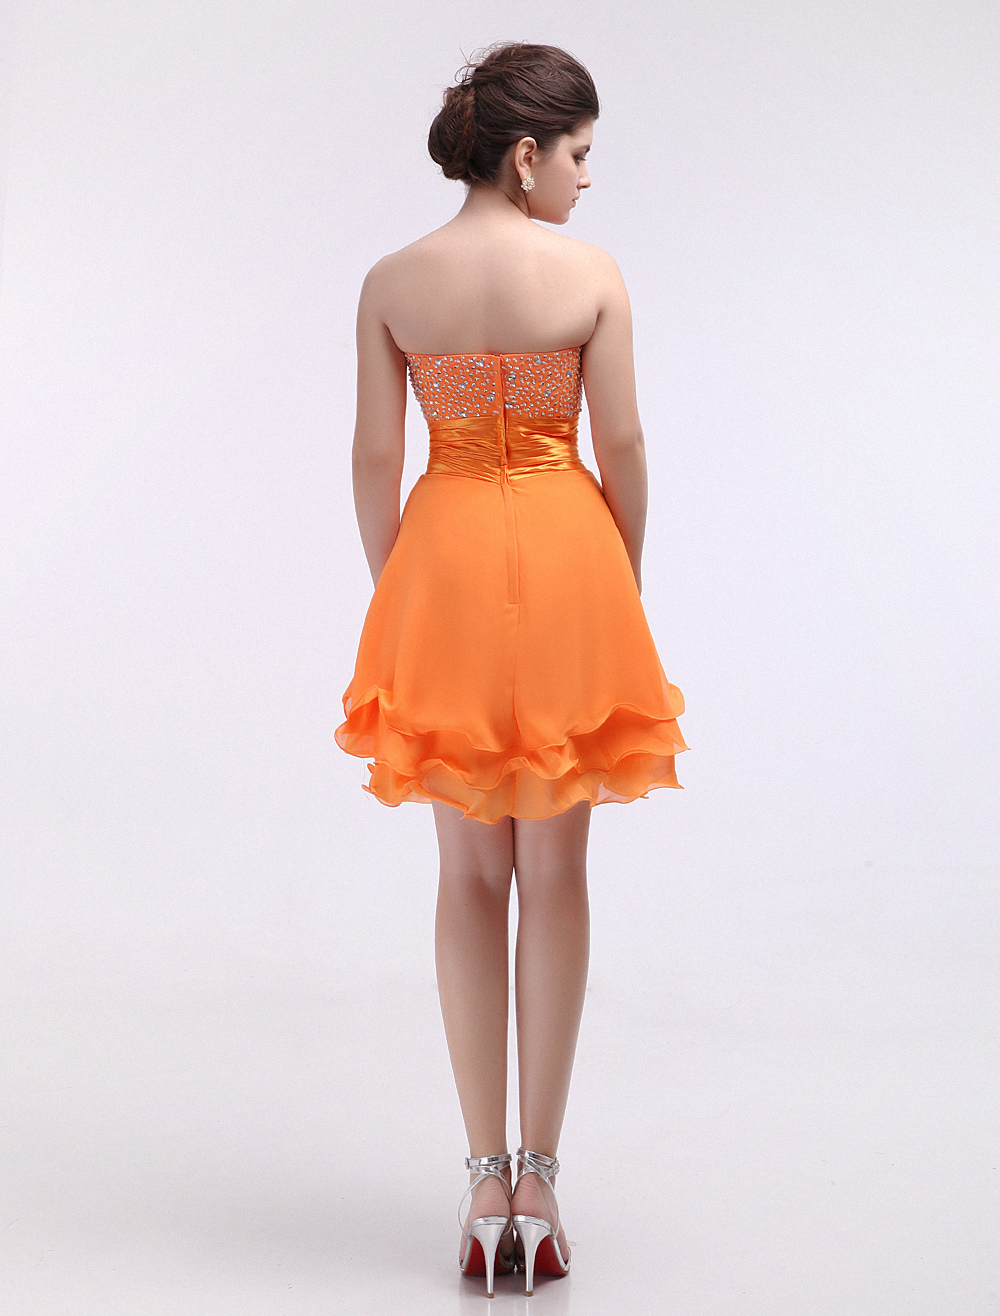 Orange Sweetheart Sequined Homecoming Dress in Knee Length - Milanoo.com